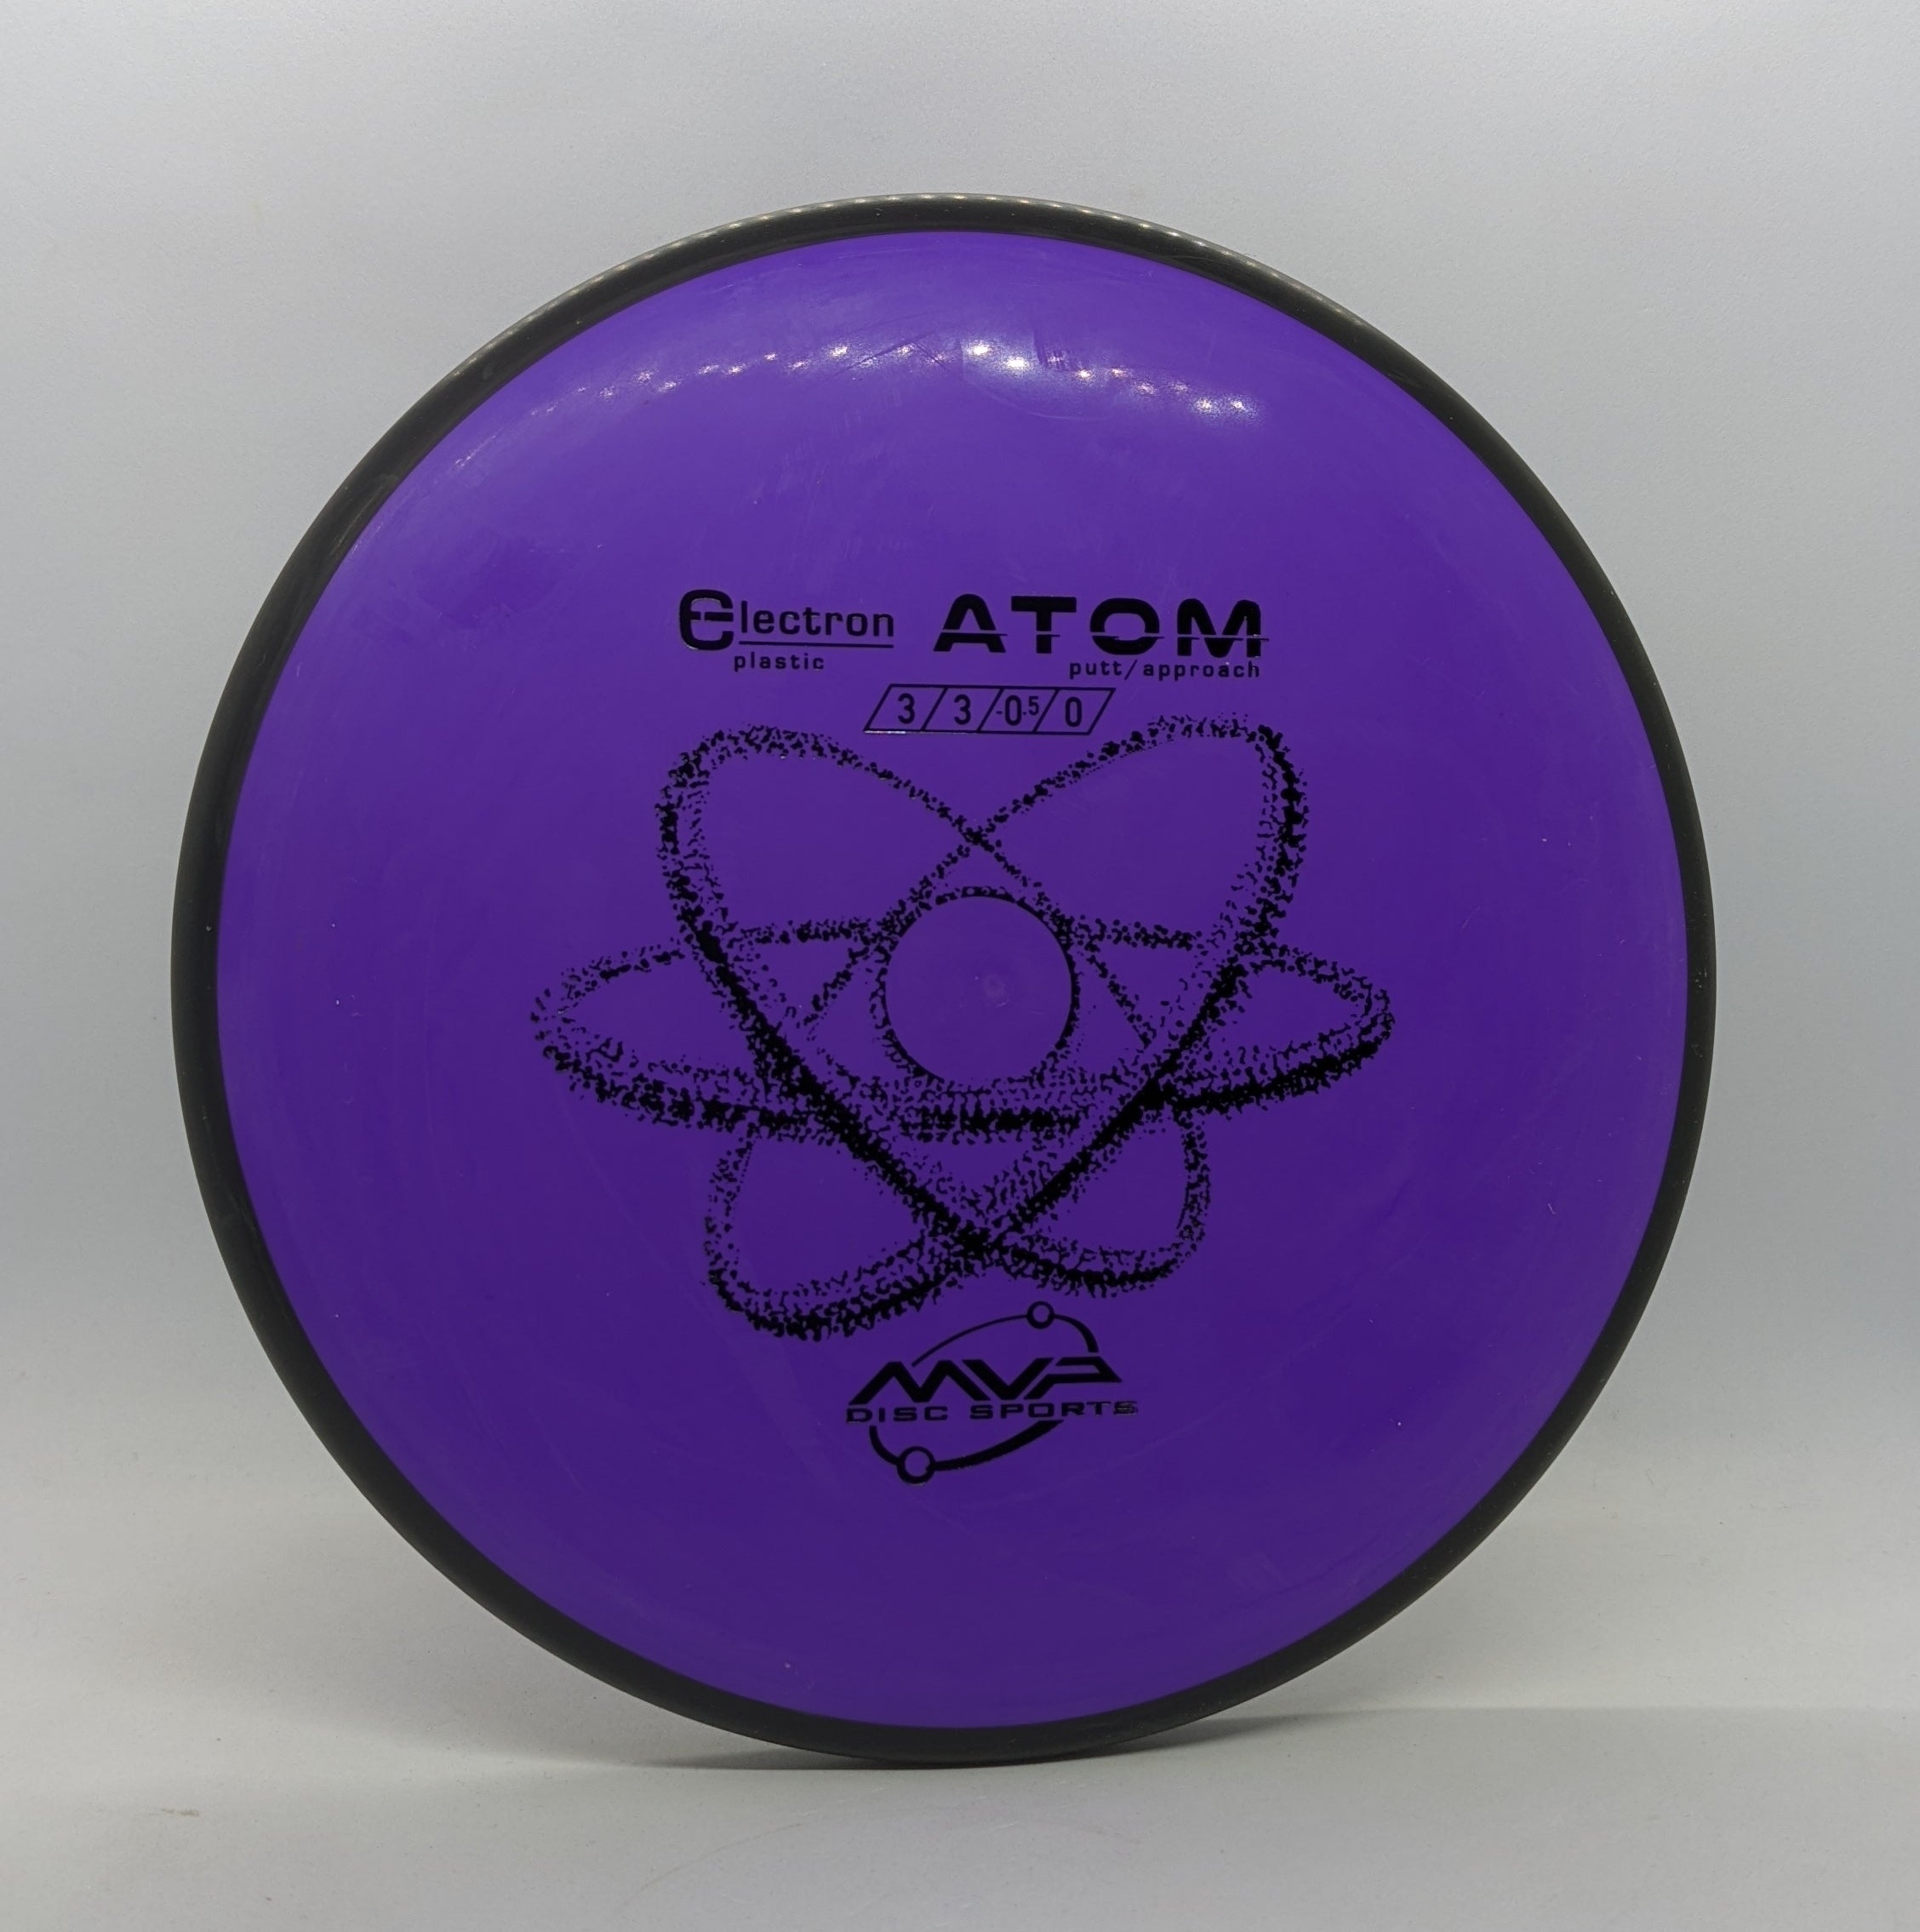 MVP Electron Atom - 0